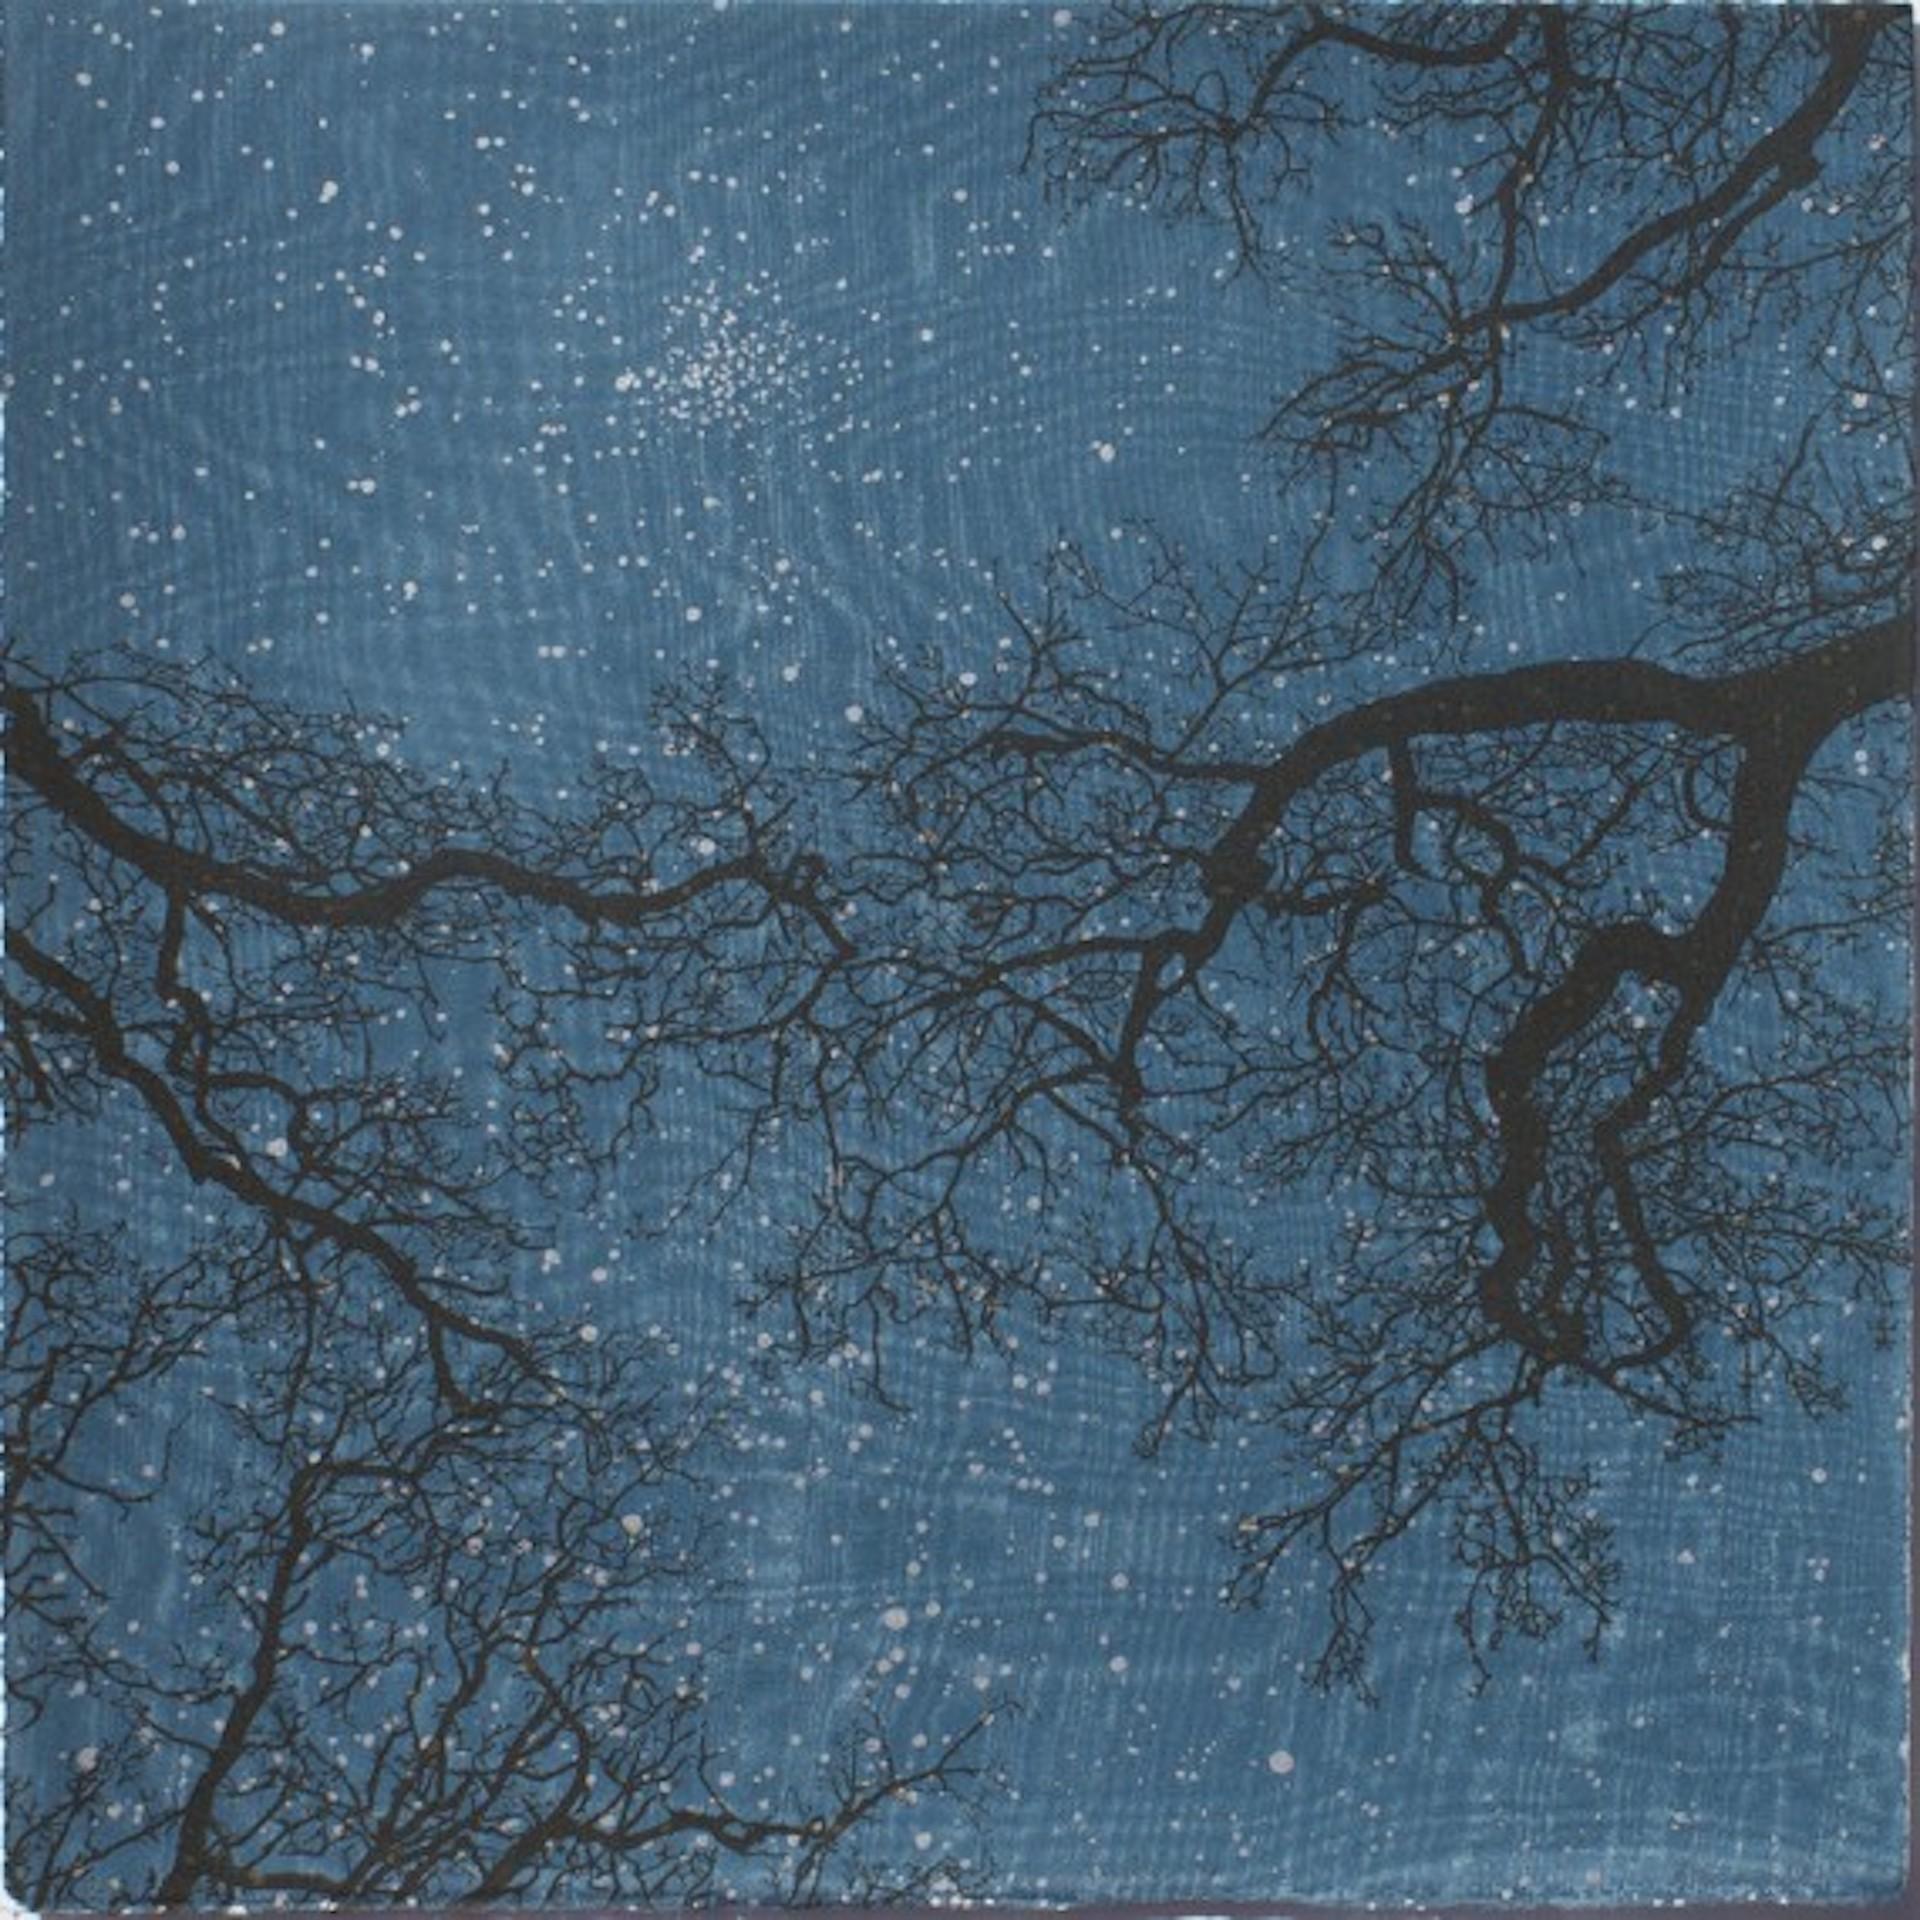 Creation IV, Anna Harley, Limited Edition Print, Starry Night Print